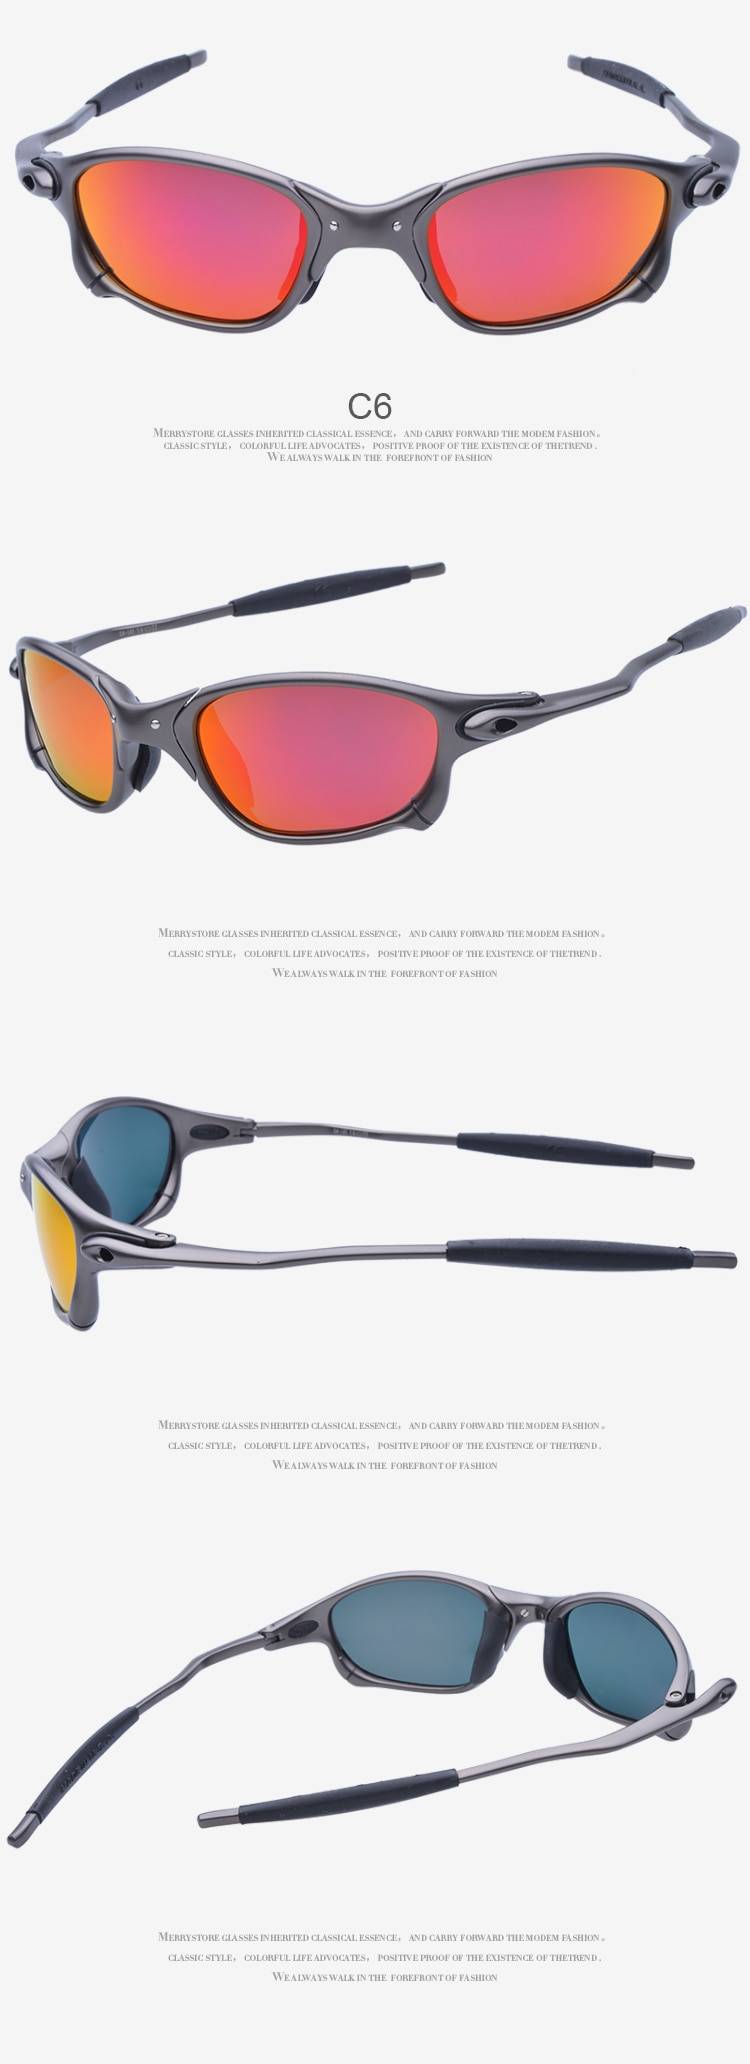 Techwear Sports Riding Cycling Sunglasses Metal Frame Polarized Cycling Glasses Men8217s Sunglasses UV400 Glasses Cyclin 9